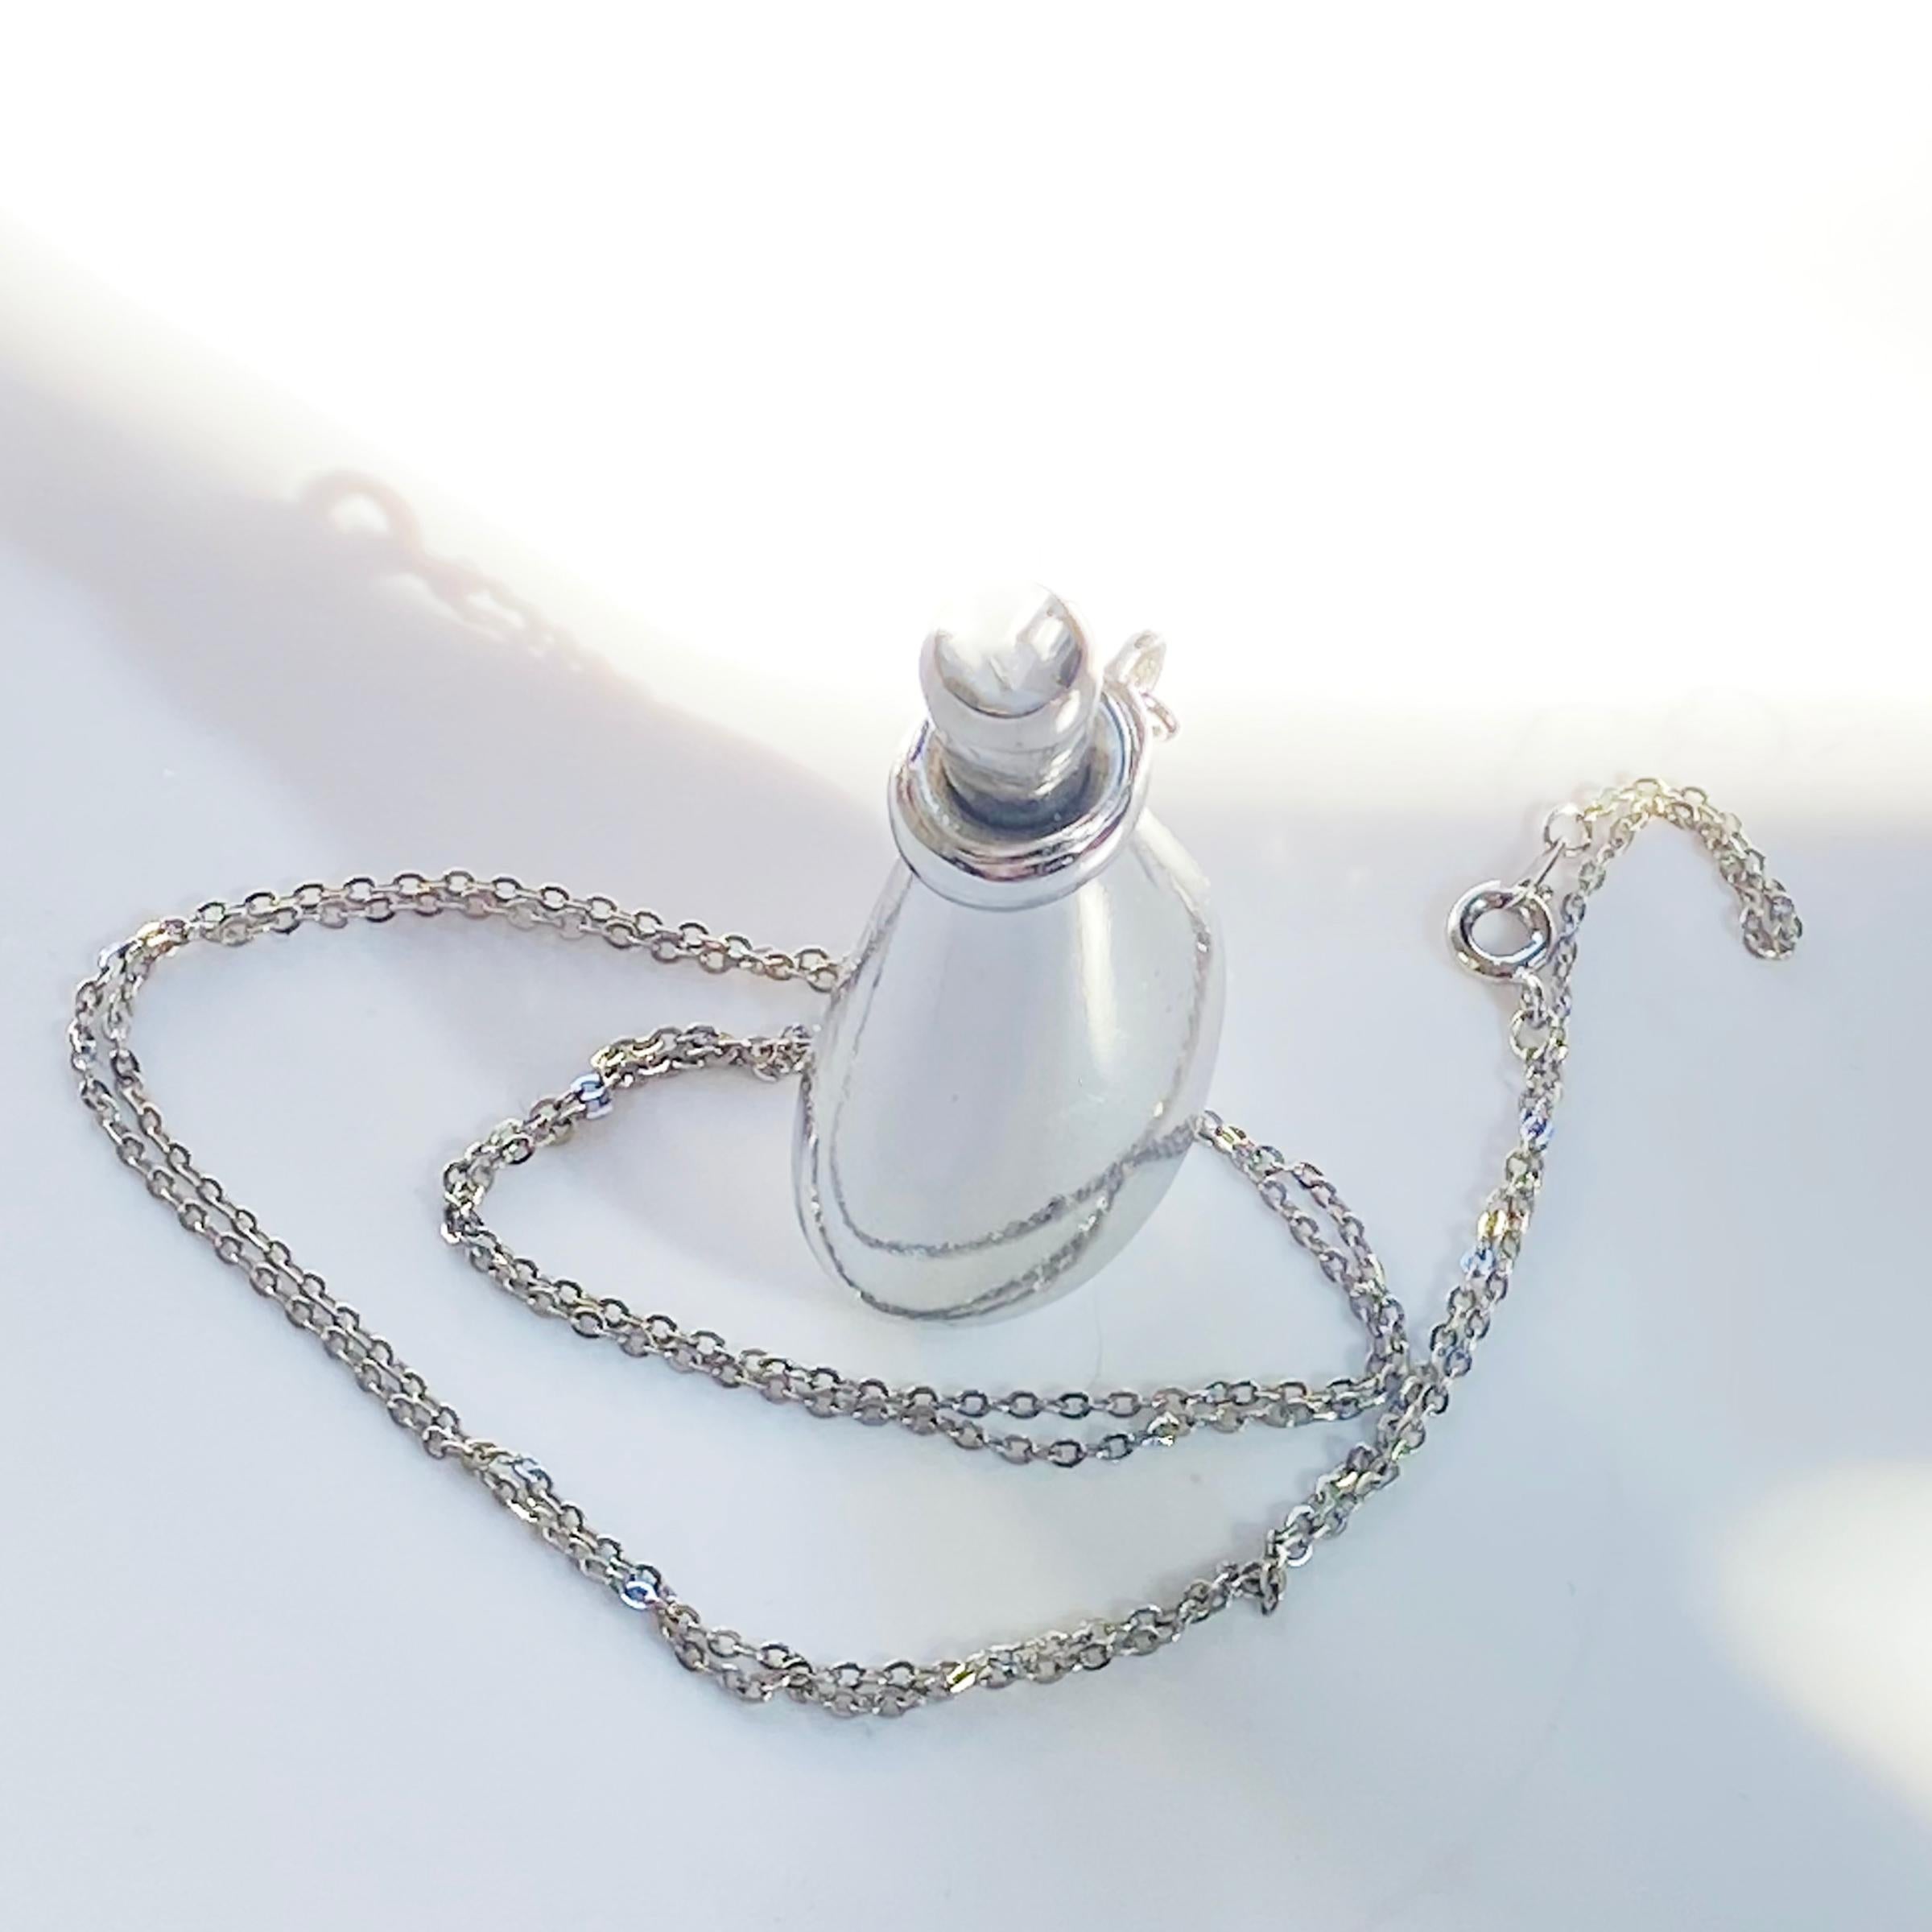 halston perfume bottle necklace